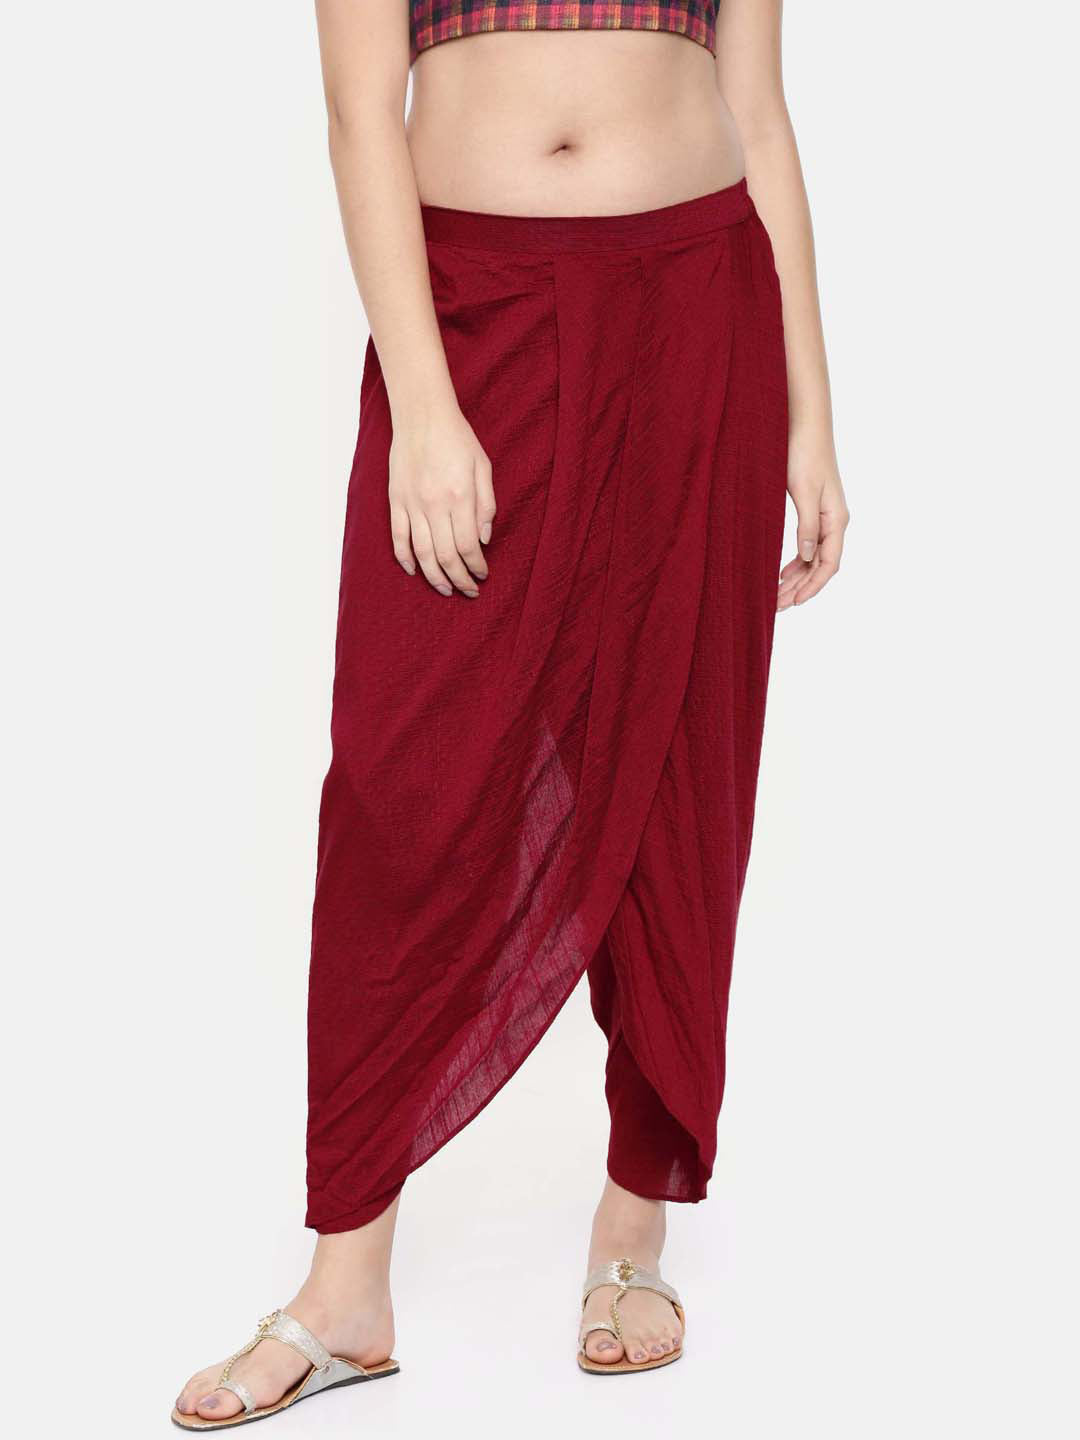 KUNZA l Shop Online l Embroidered Beige Dhoti Pants